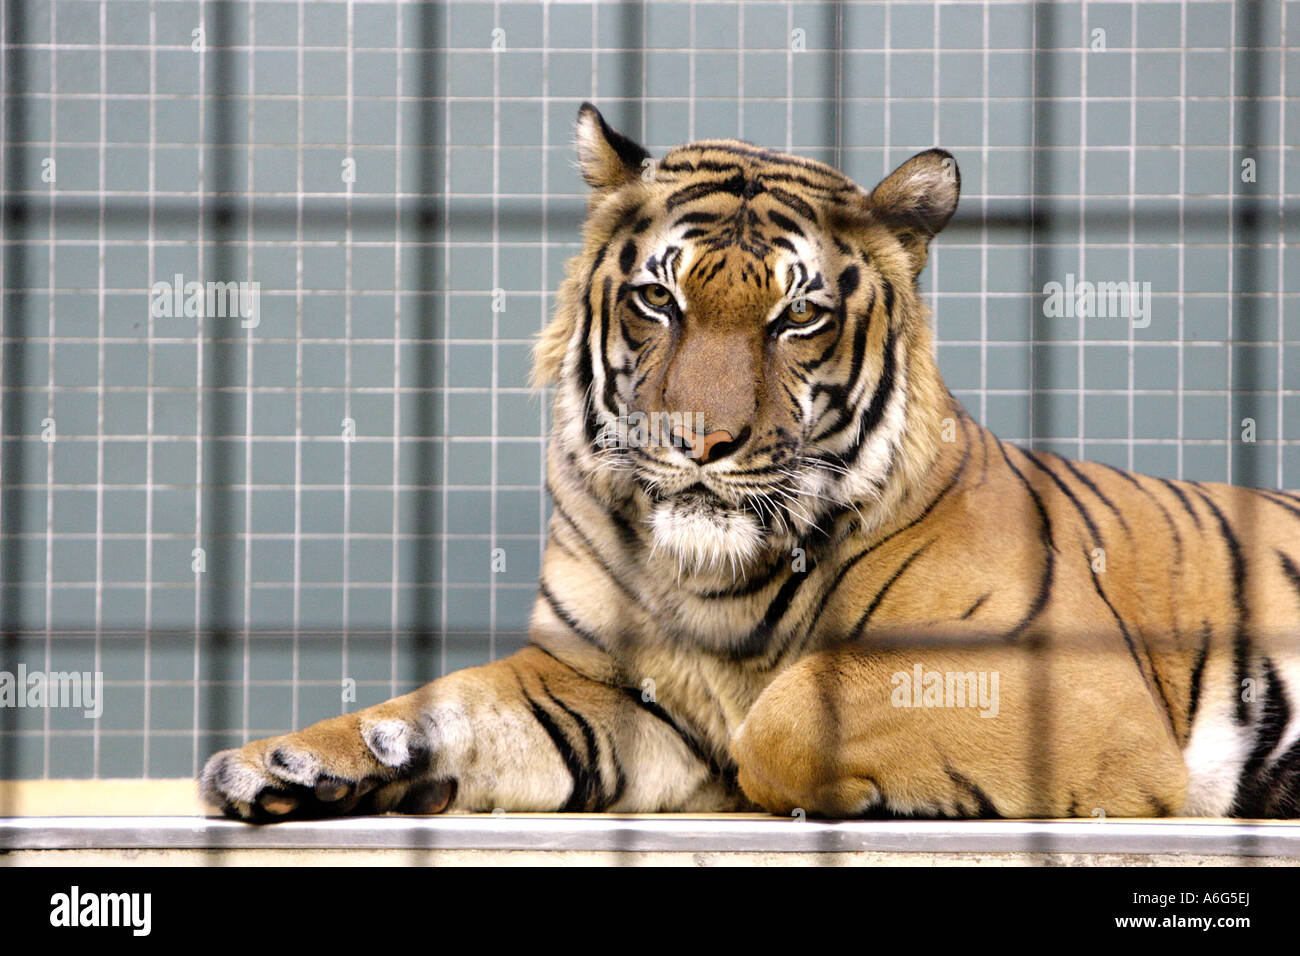 Tiger put behind bars Stock Photo